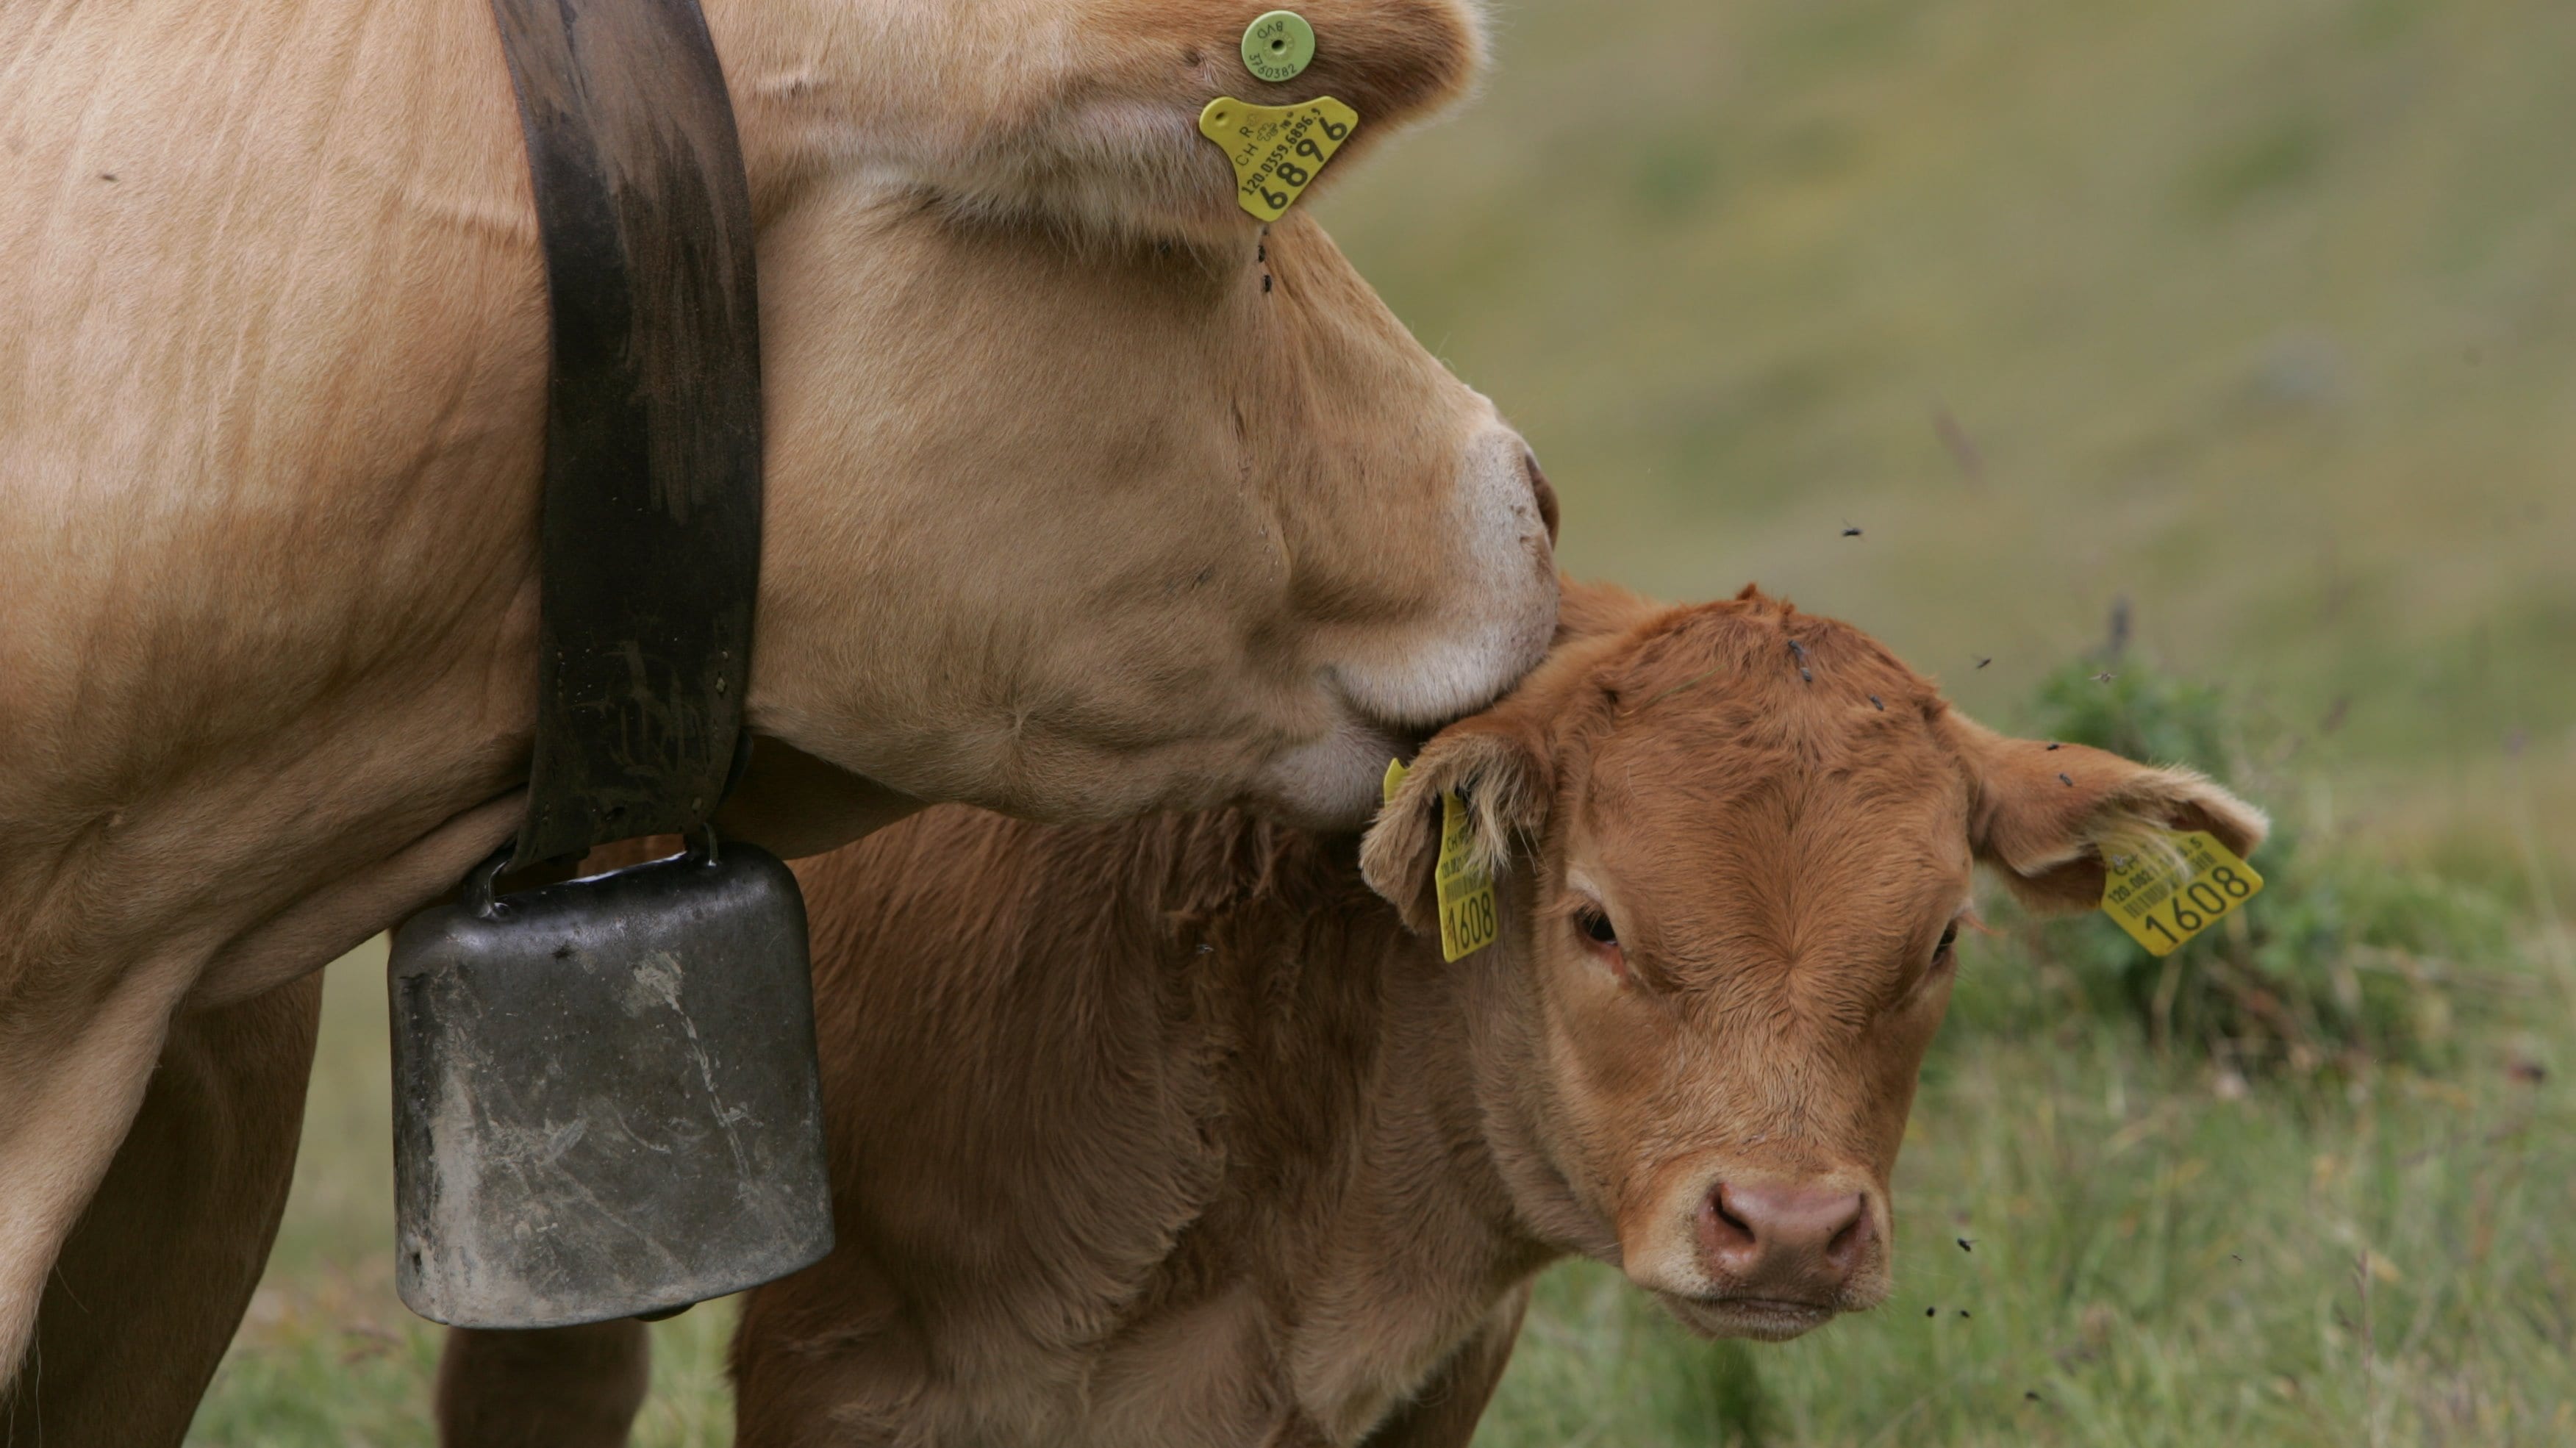 Kälber nicht berühren - Mutterkühe mögen dies nicht und beschützen ihr Kalb. Quelle: Rico Lamprecht